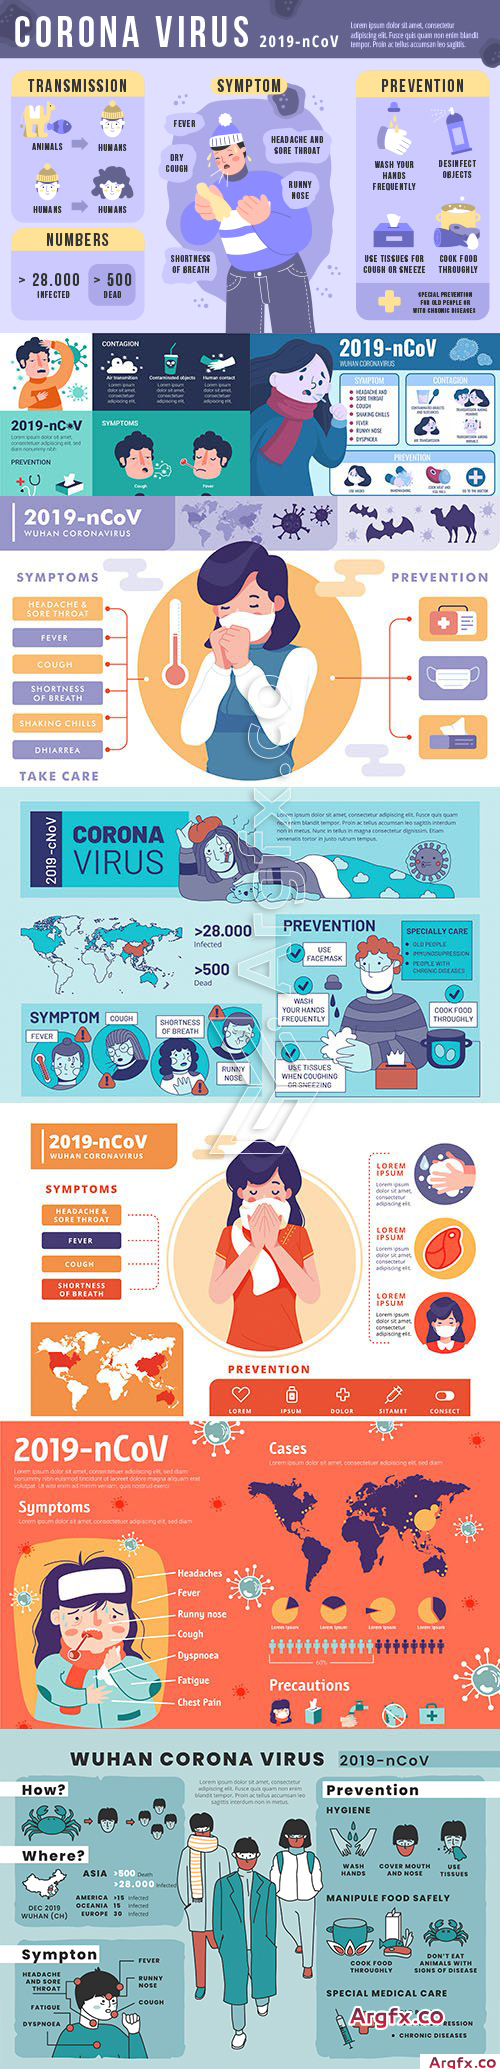  Coronavirus 2019 symptoms and infographic infection